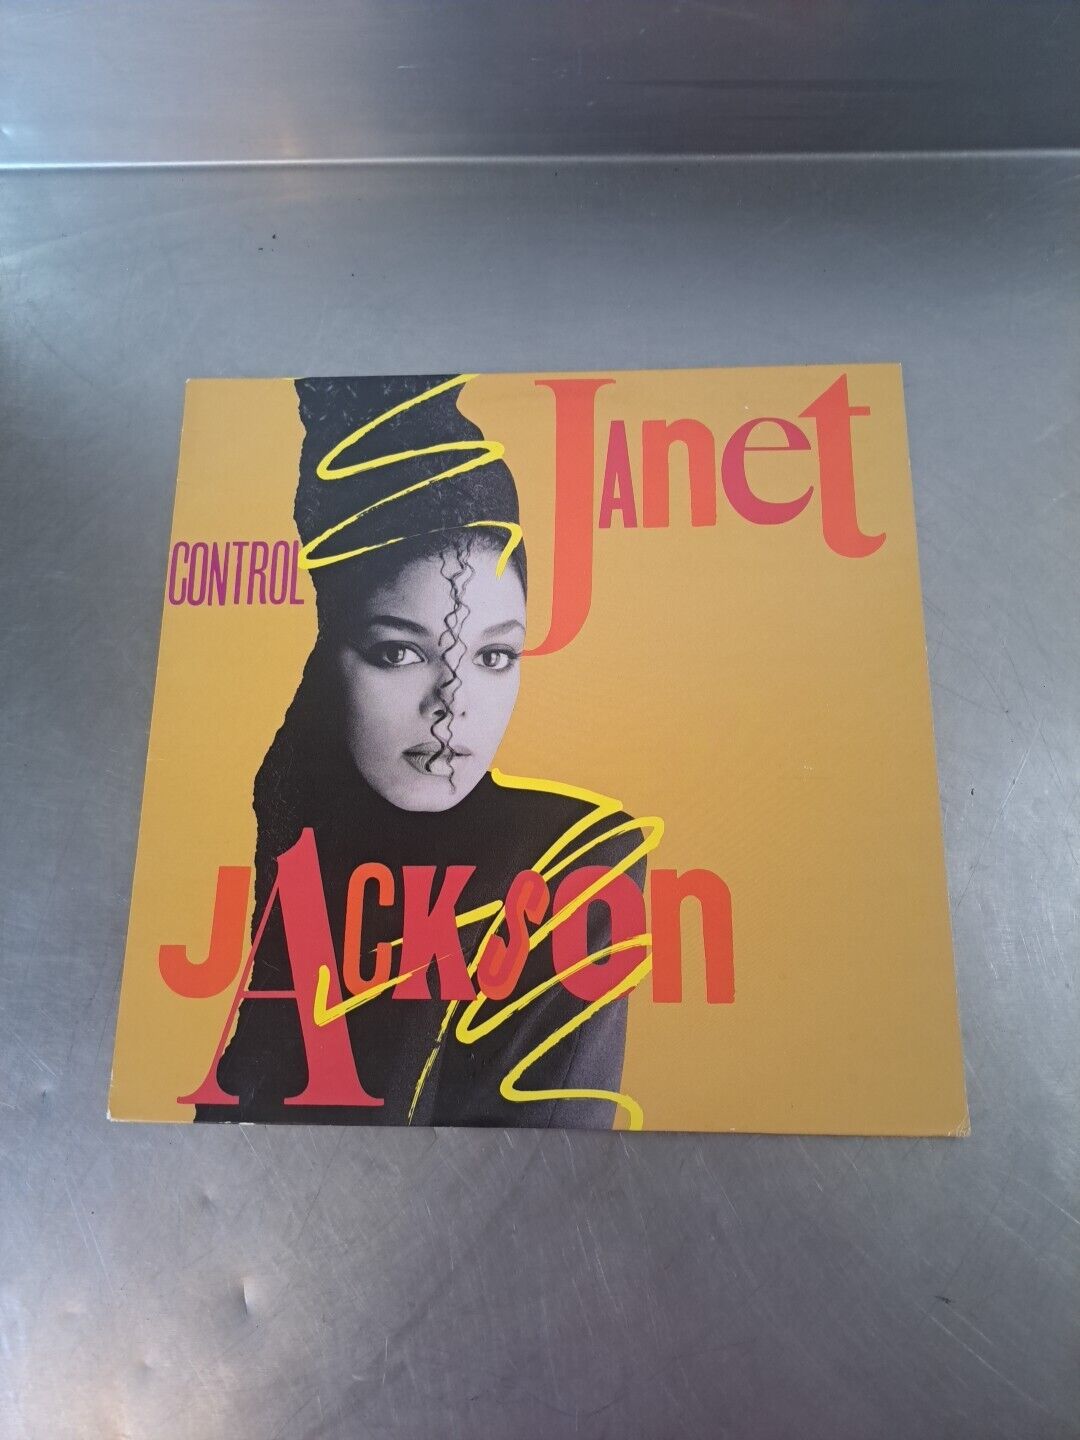 Janet Jackson - Control (12", Single, Promo) (Near Mint)